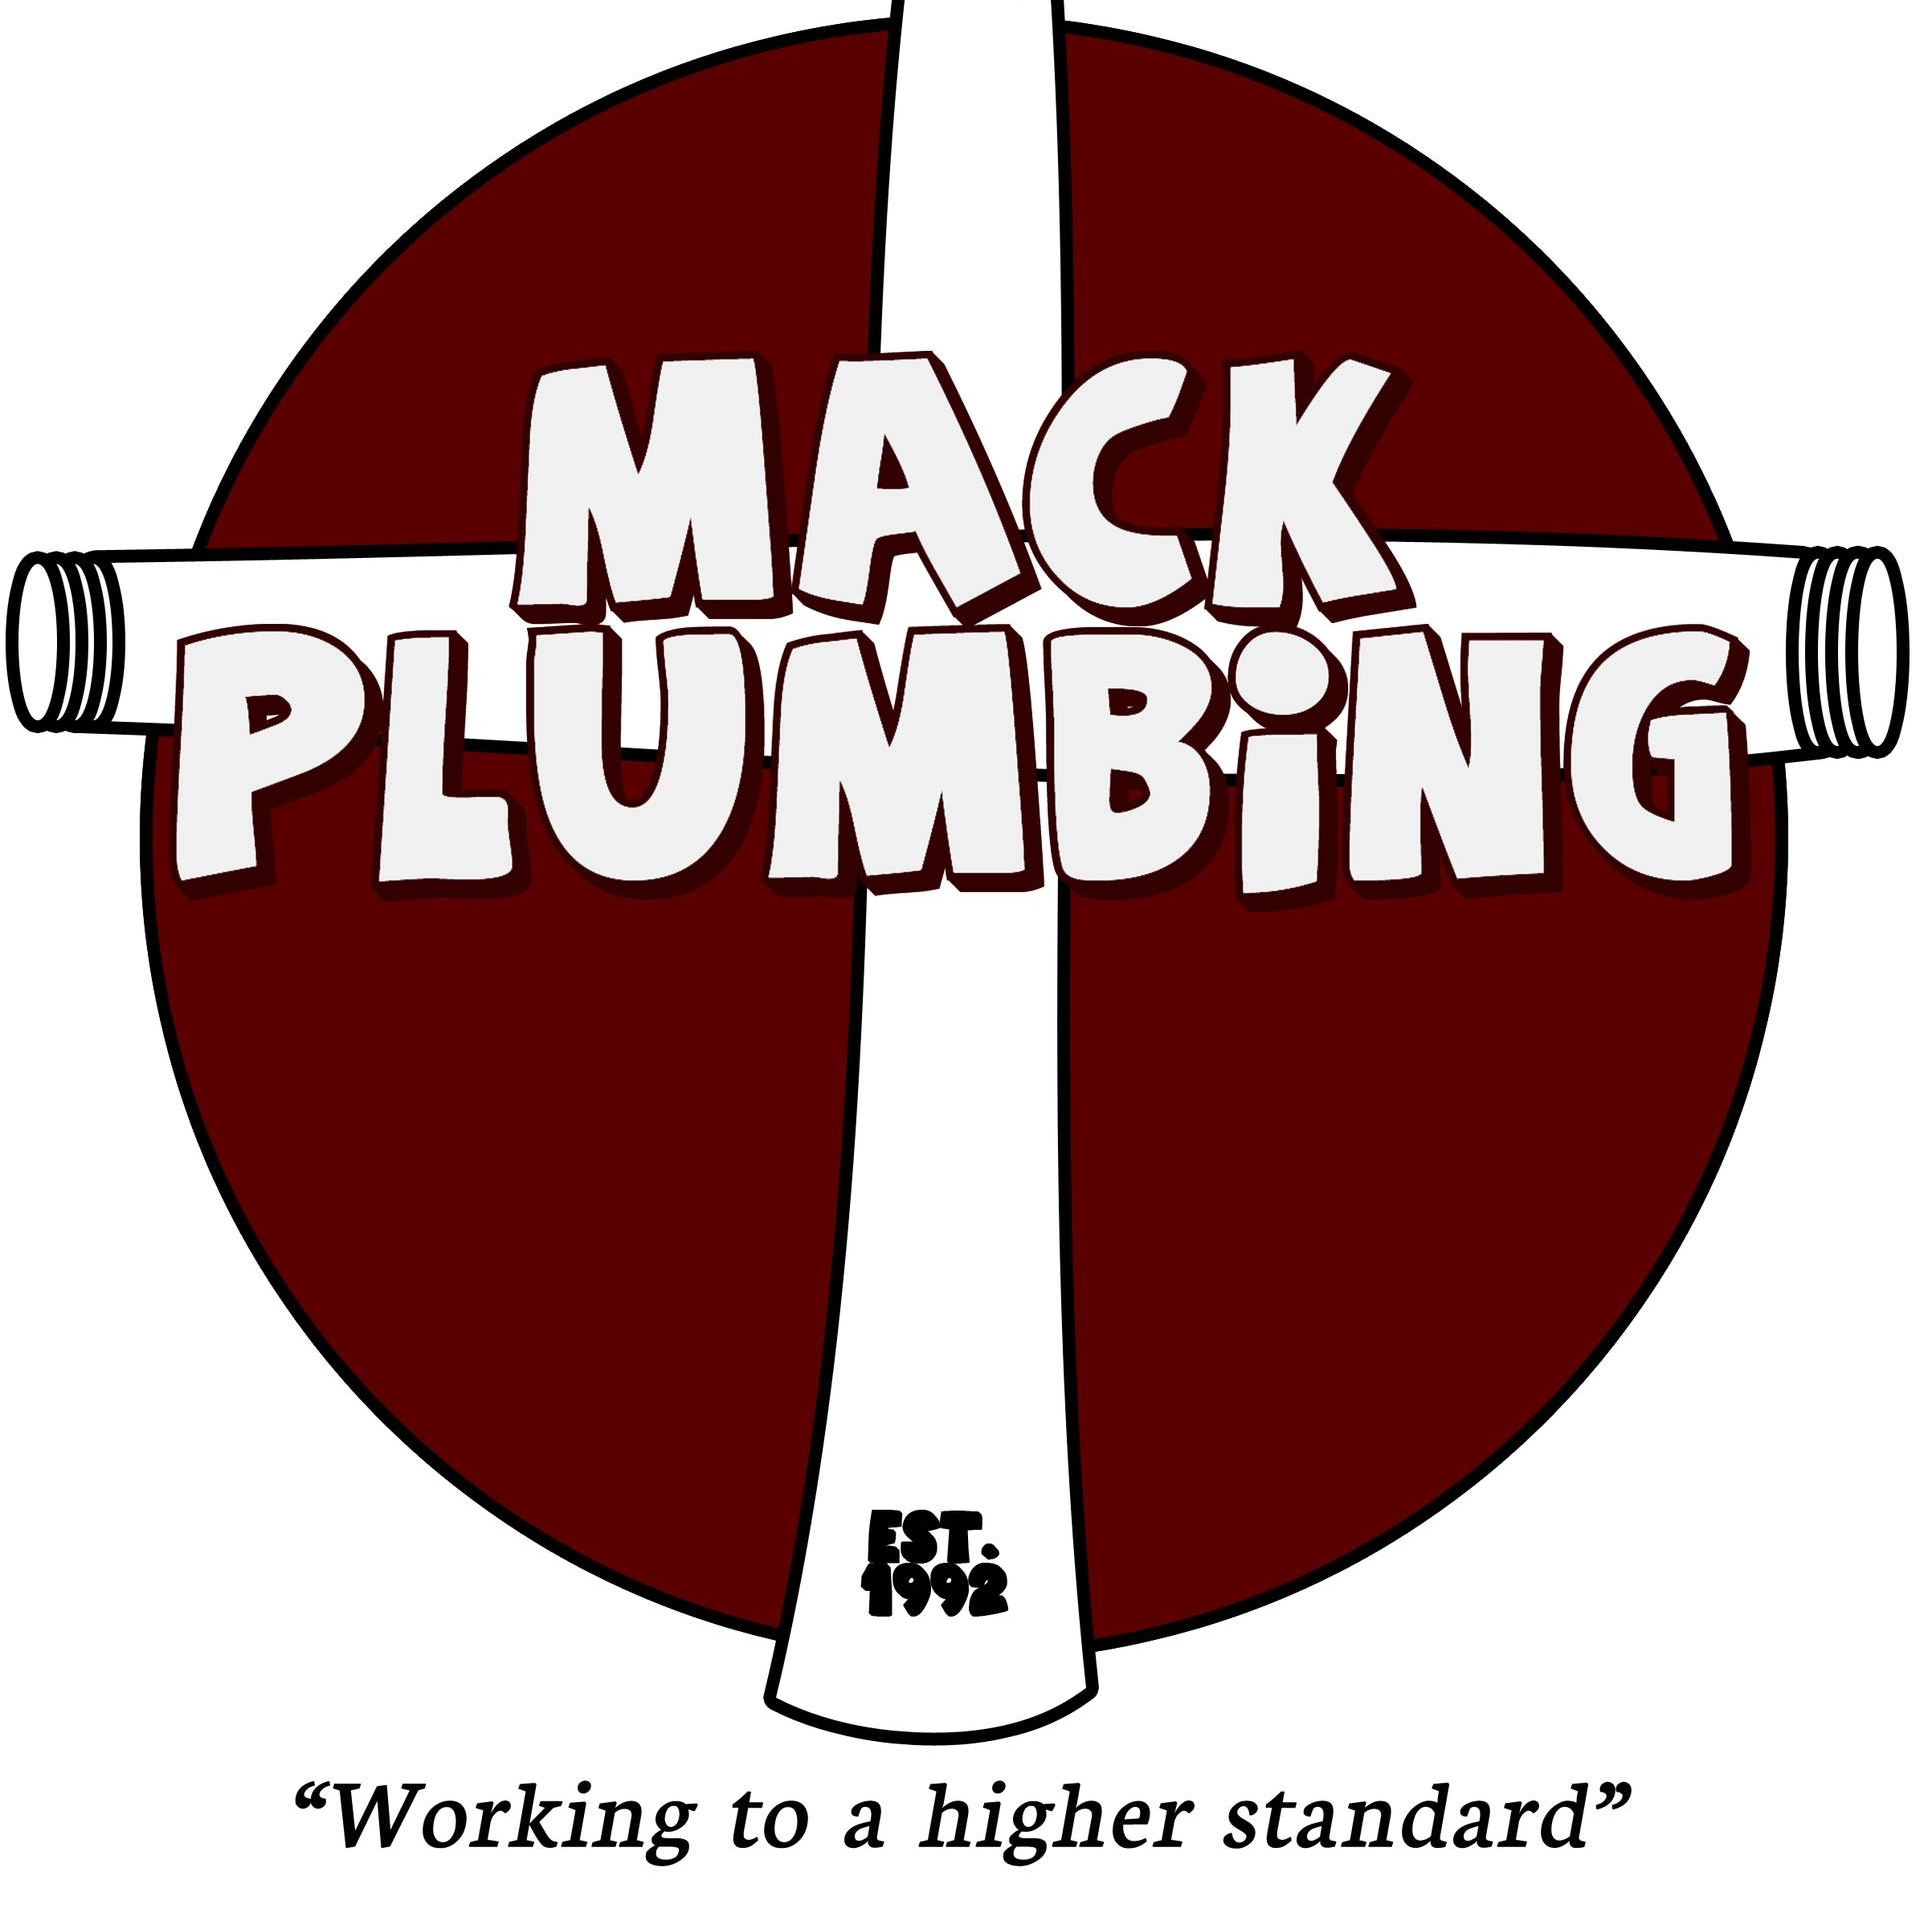 Mack Plumbing & Hydronics 19561 Miles Rd, North Randall Ohio 44128